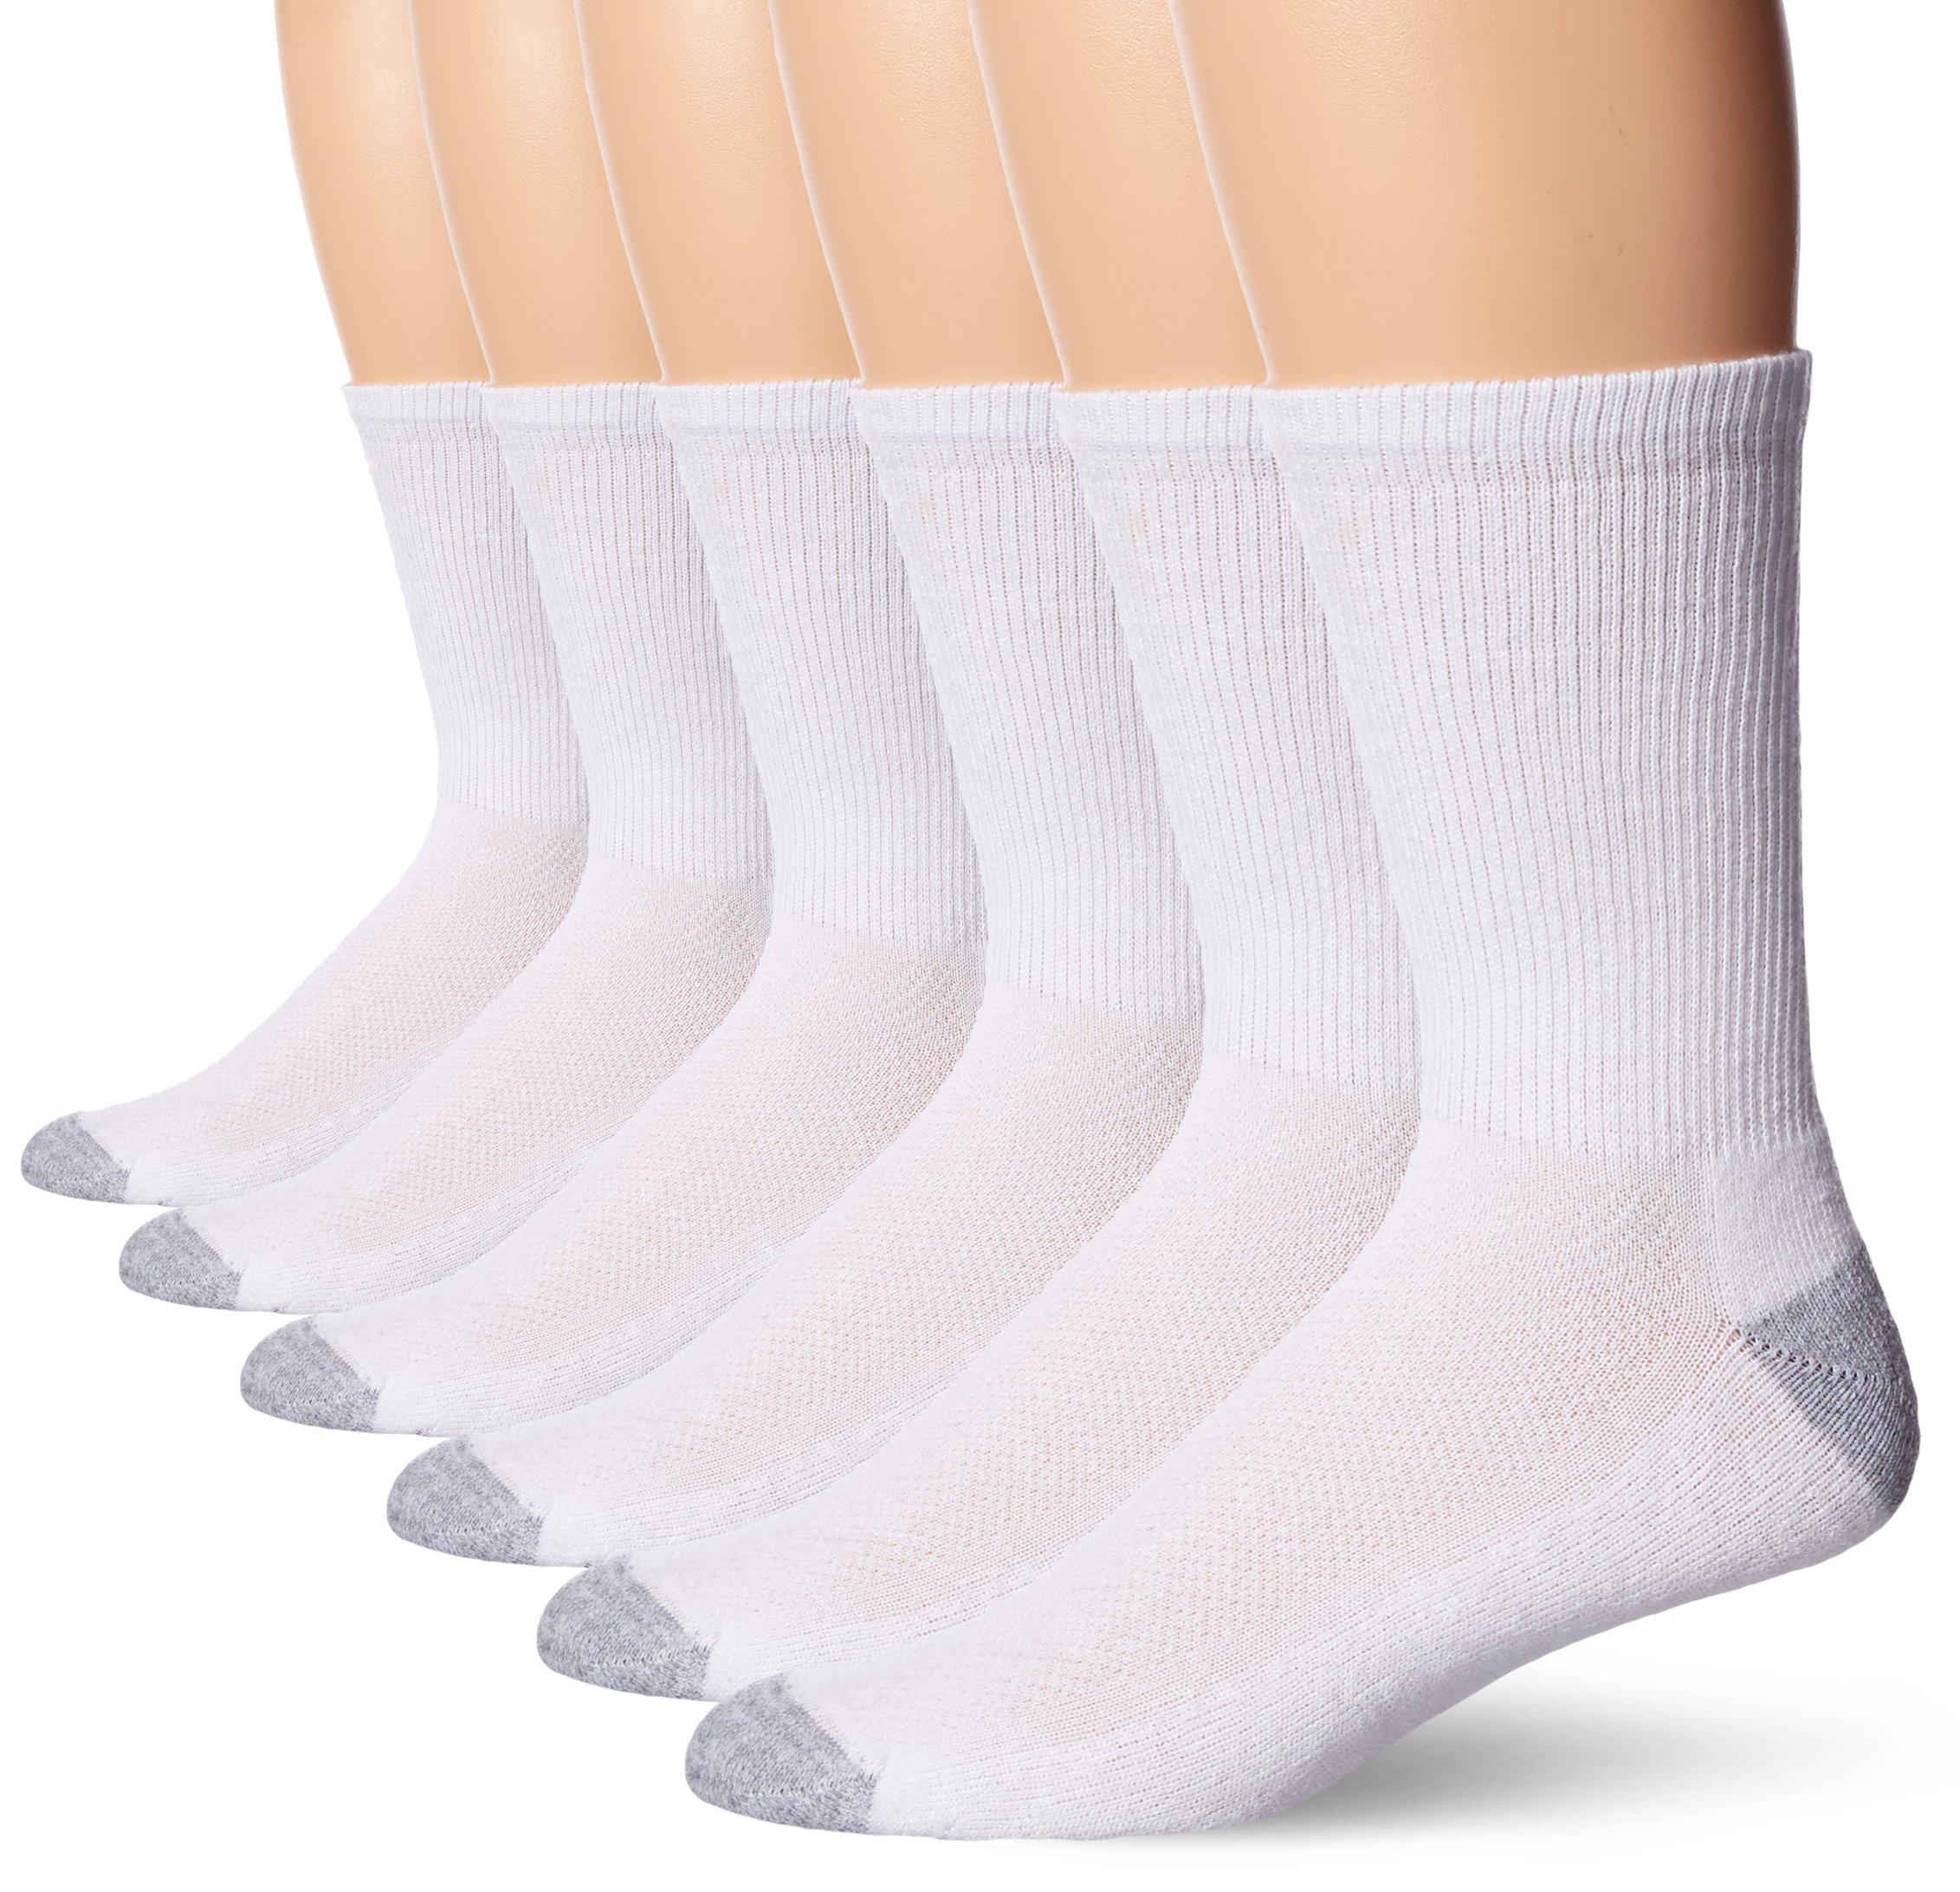 Hanes Freshiq X-temp Comfort Cool Crew Socks, 6-pack, White/grey, Shoe ...